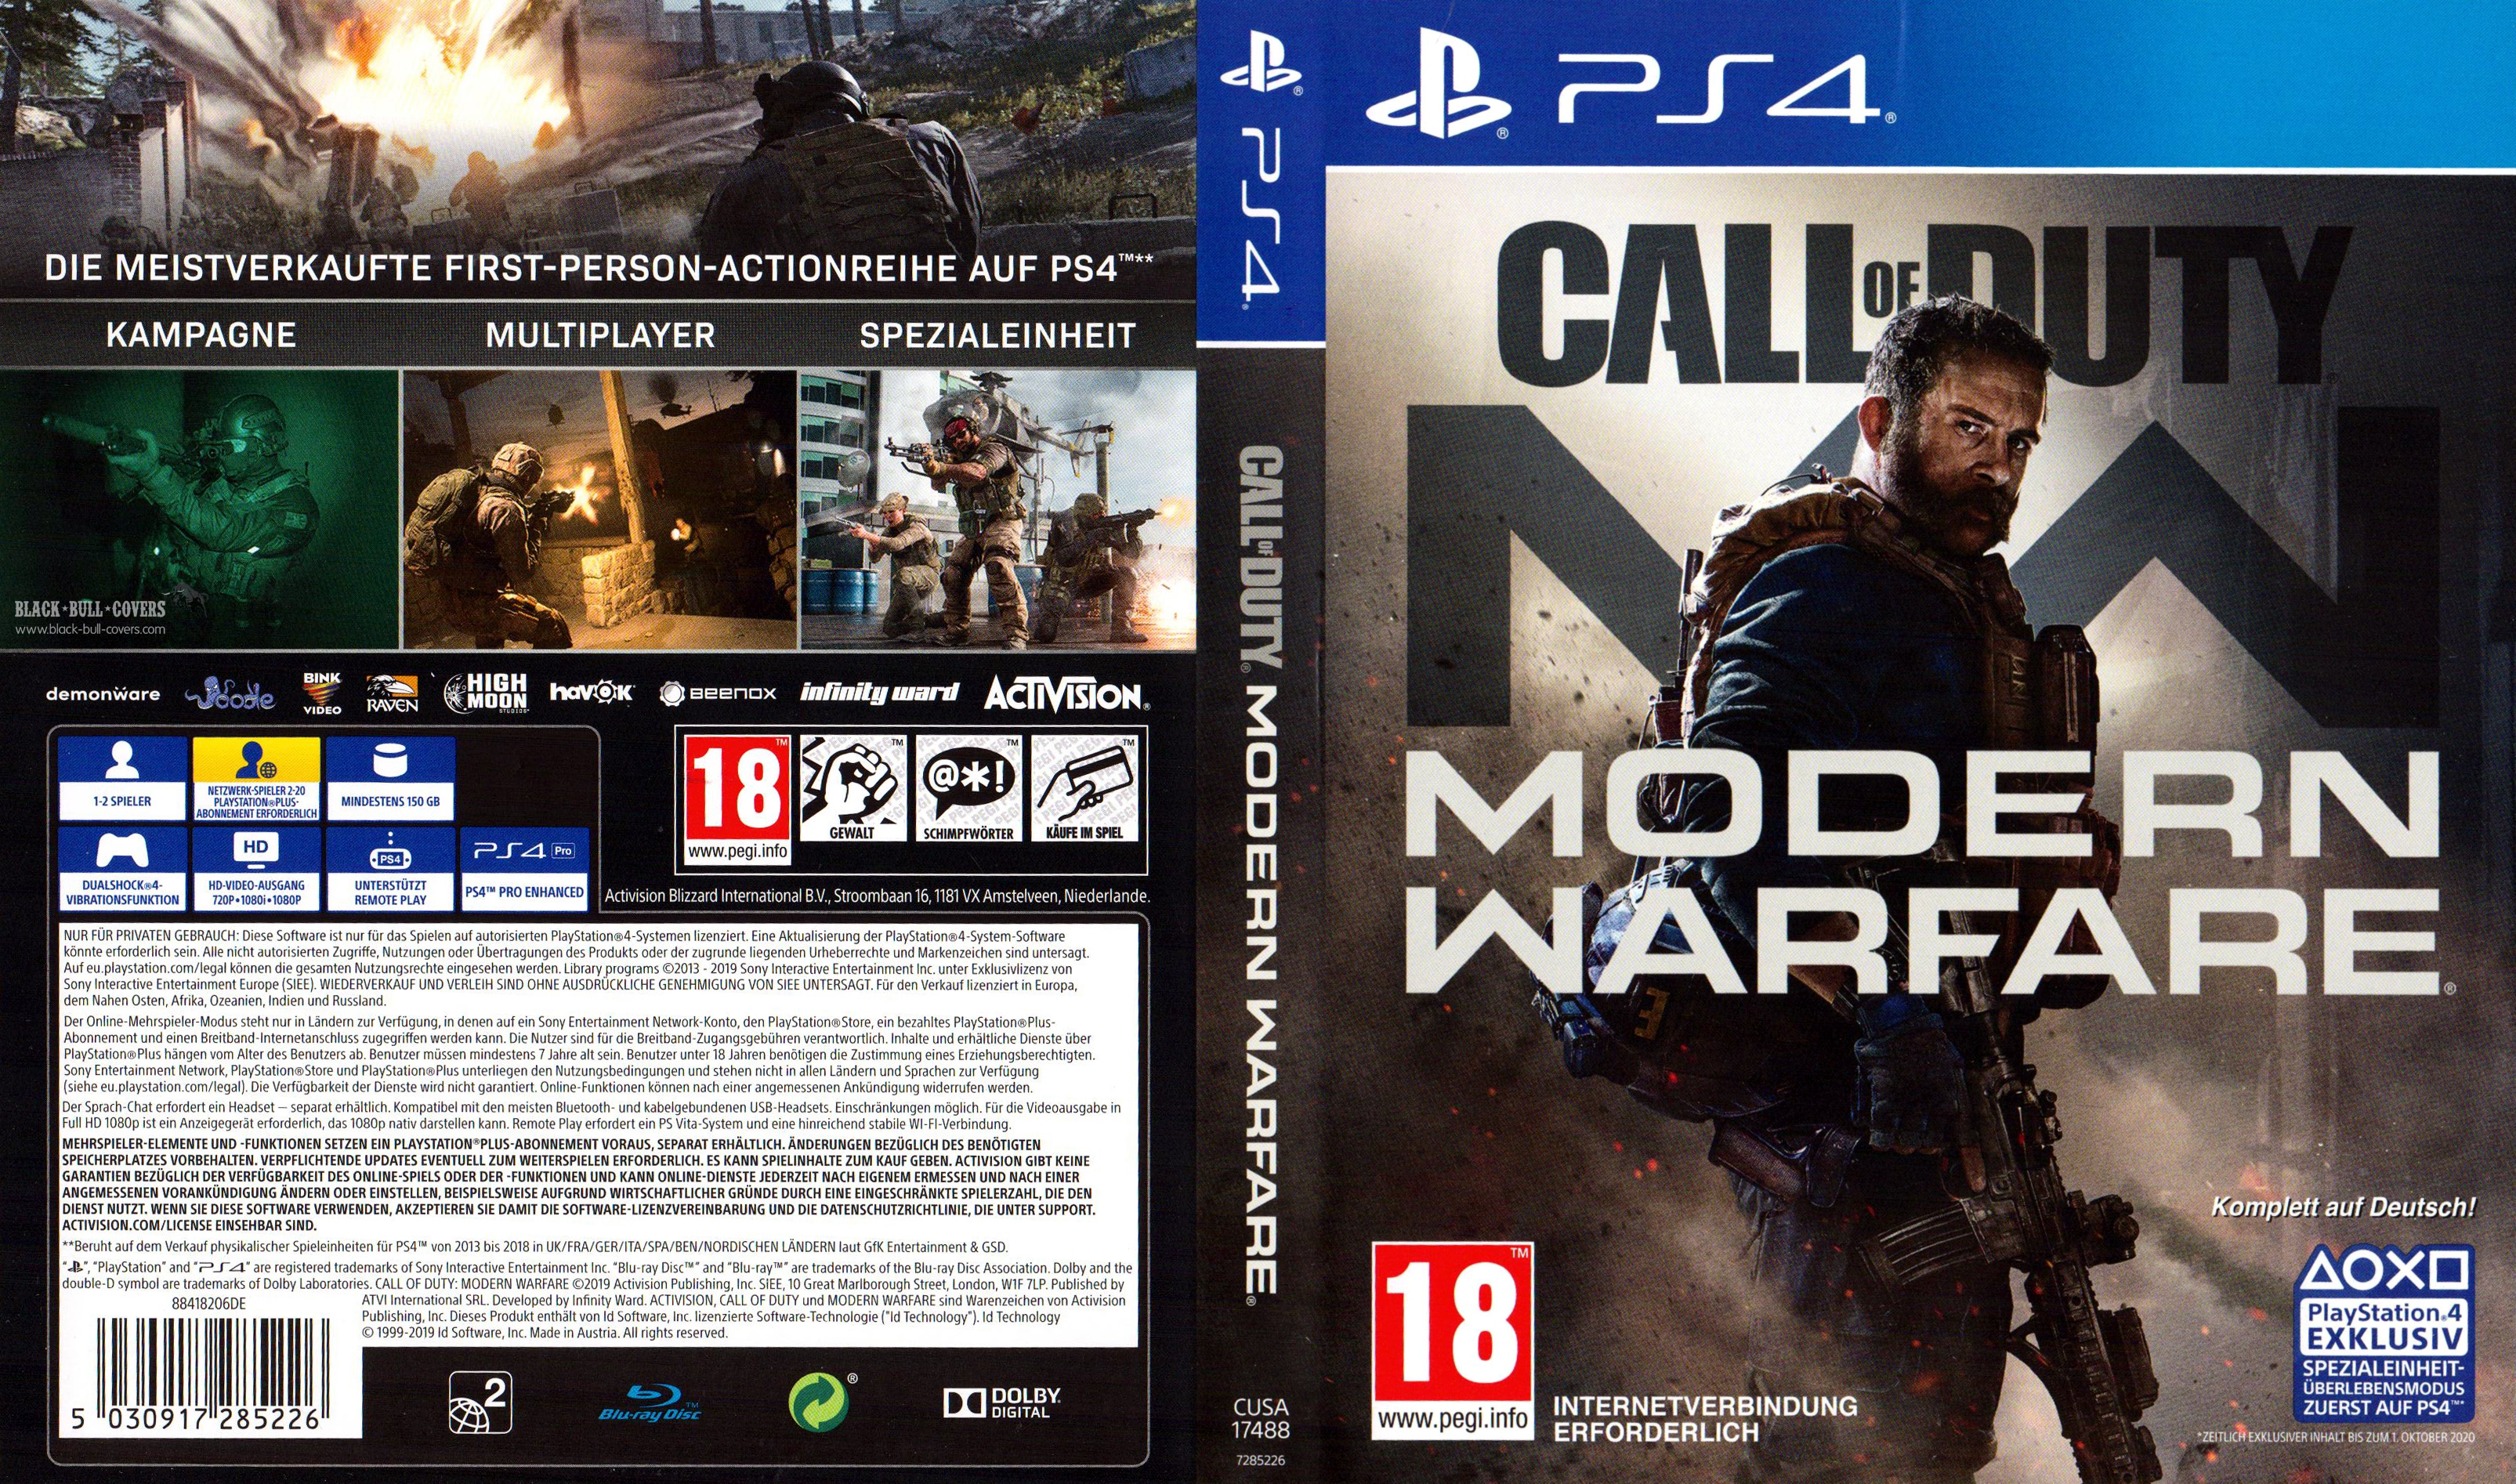 Call of duty modern warfare ps4 купить. Call of Duty ps4 диск. Диски ПС 4 Call of Duty Modern Warfare. Cover Call of Duty Modern Warfare ps4. Call of Duty Modern Warfare ps4 обложка.